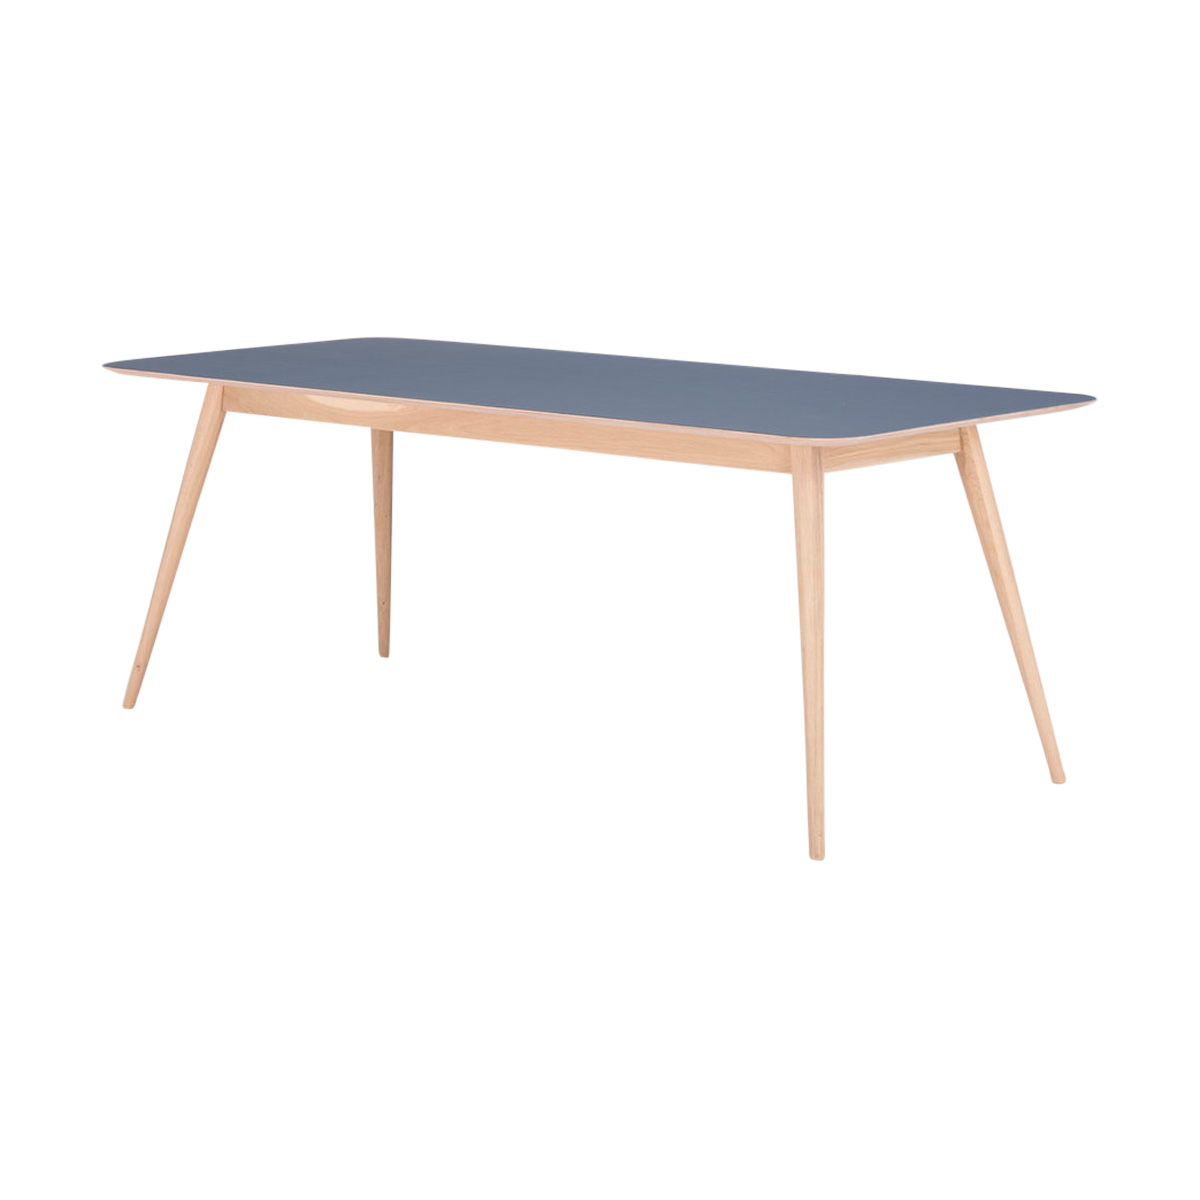 Stafa table houten eettafel whitewash - met linoleum tafelblad smokey blue - 160 x 90 cm